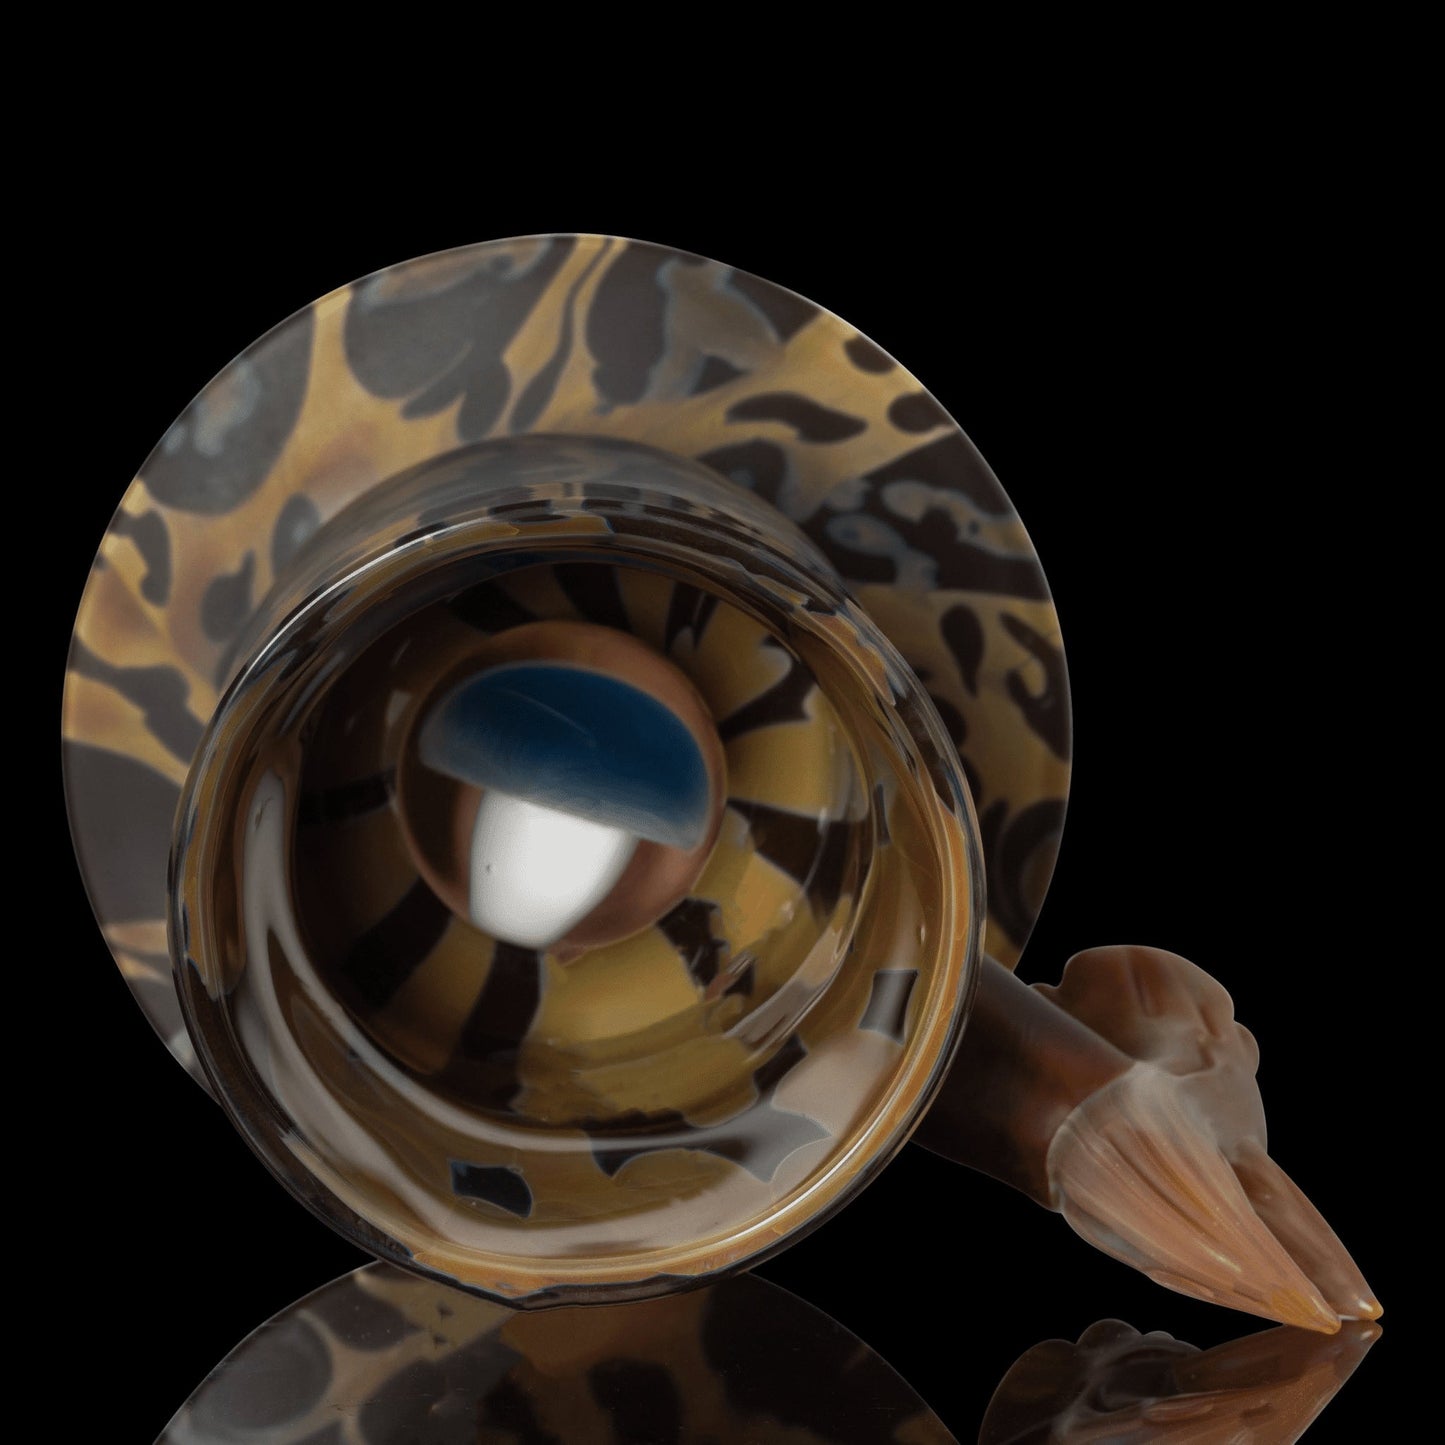 premium quality design of the Mushroom Tea Cup by Elks That Run (SCOPE 2022)